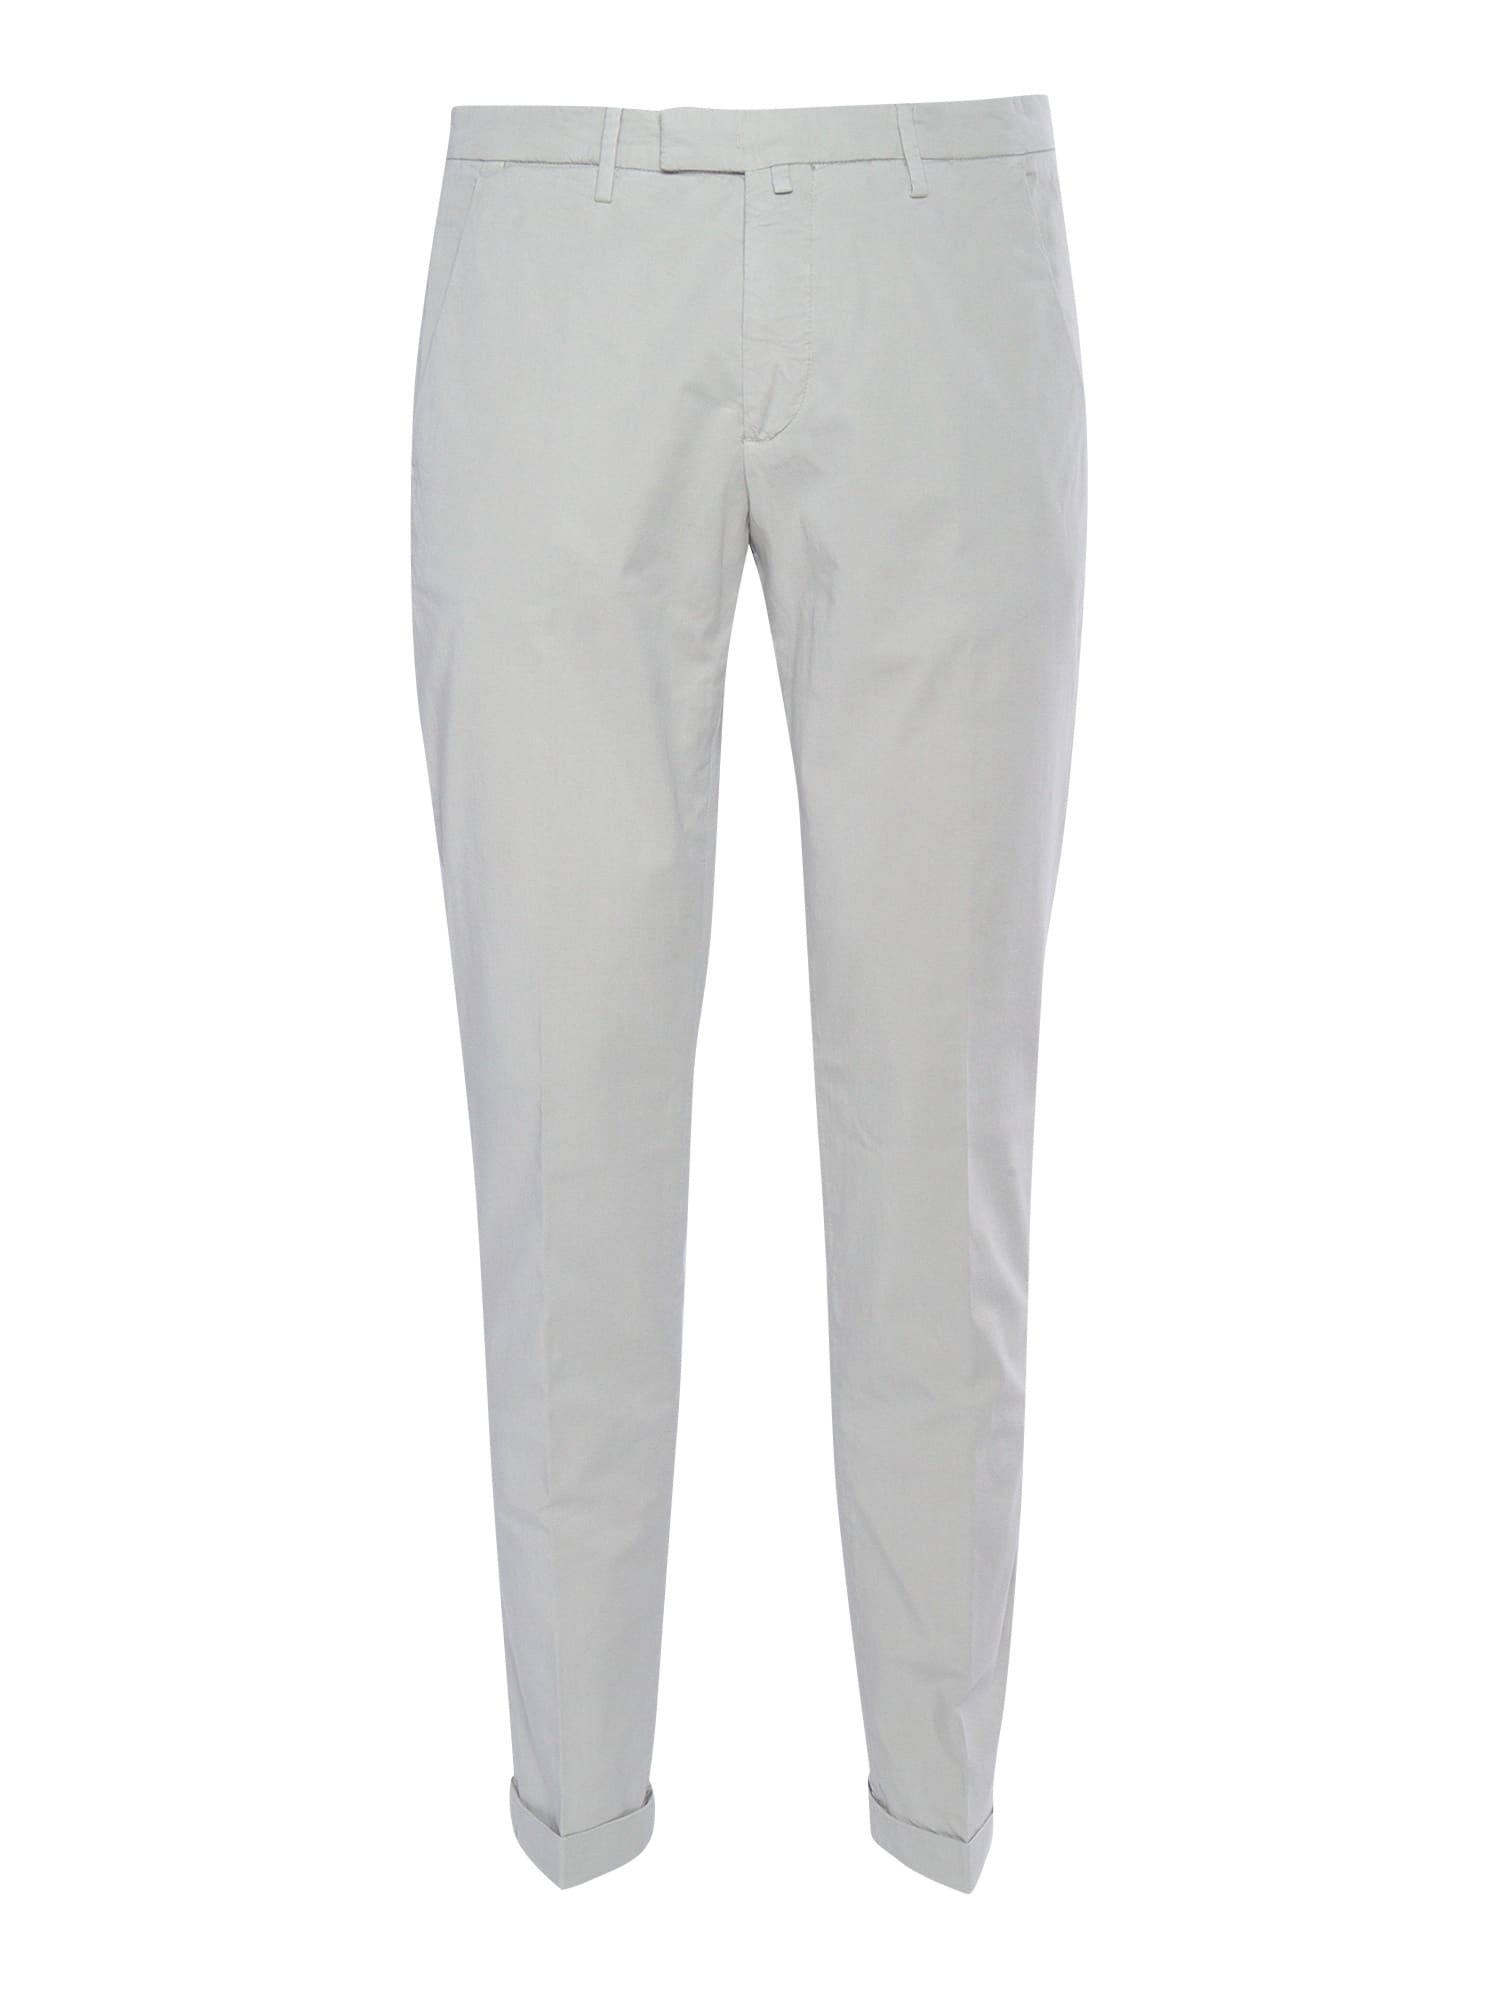 1949 Elegant White Trousers